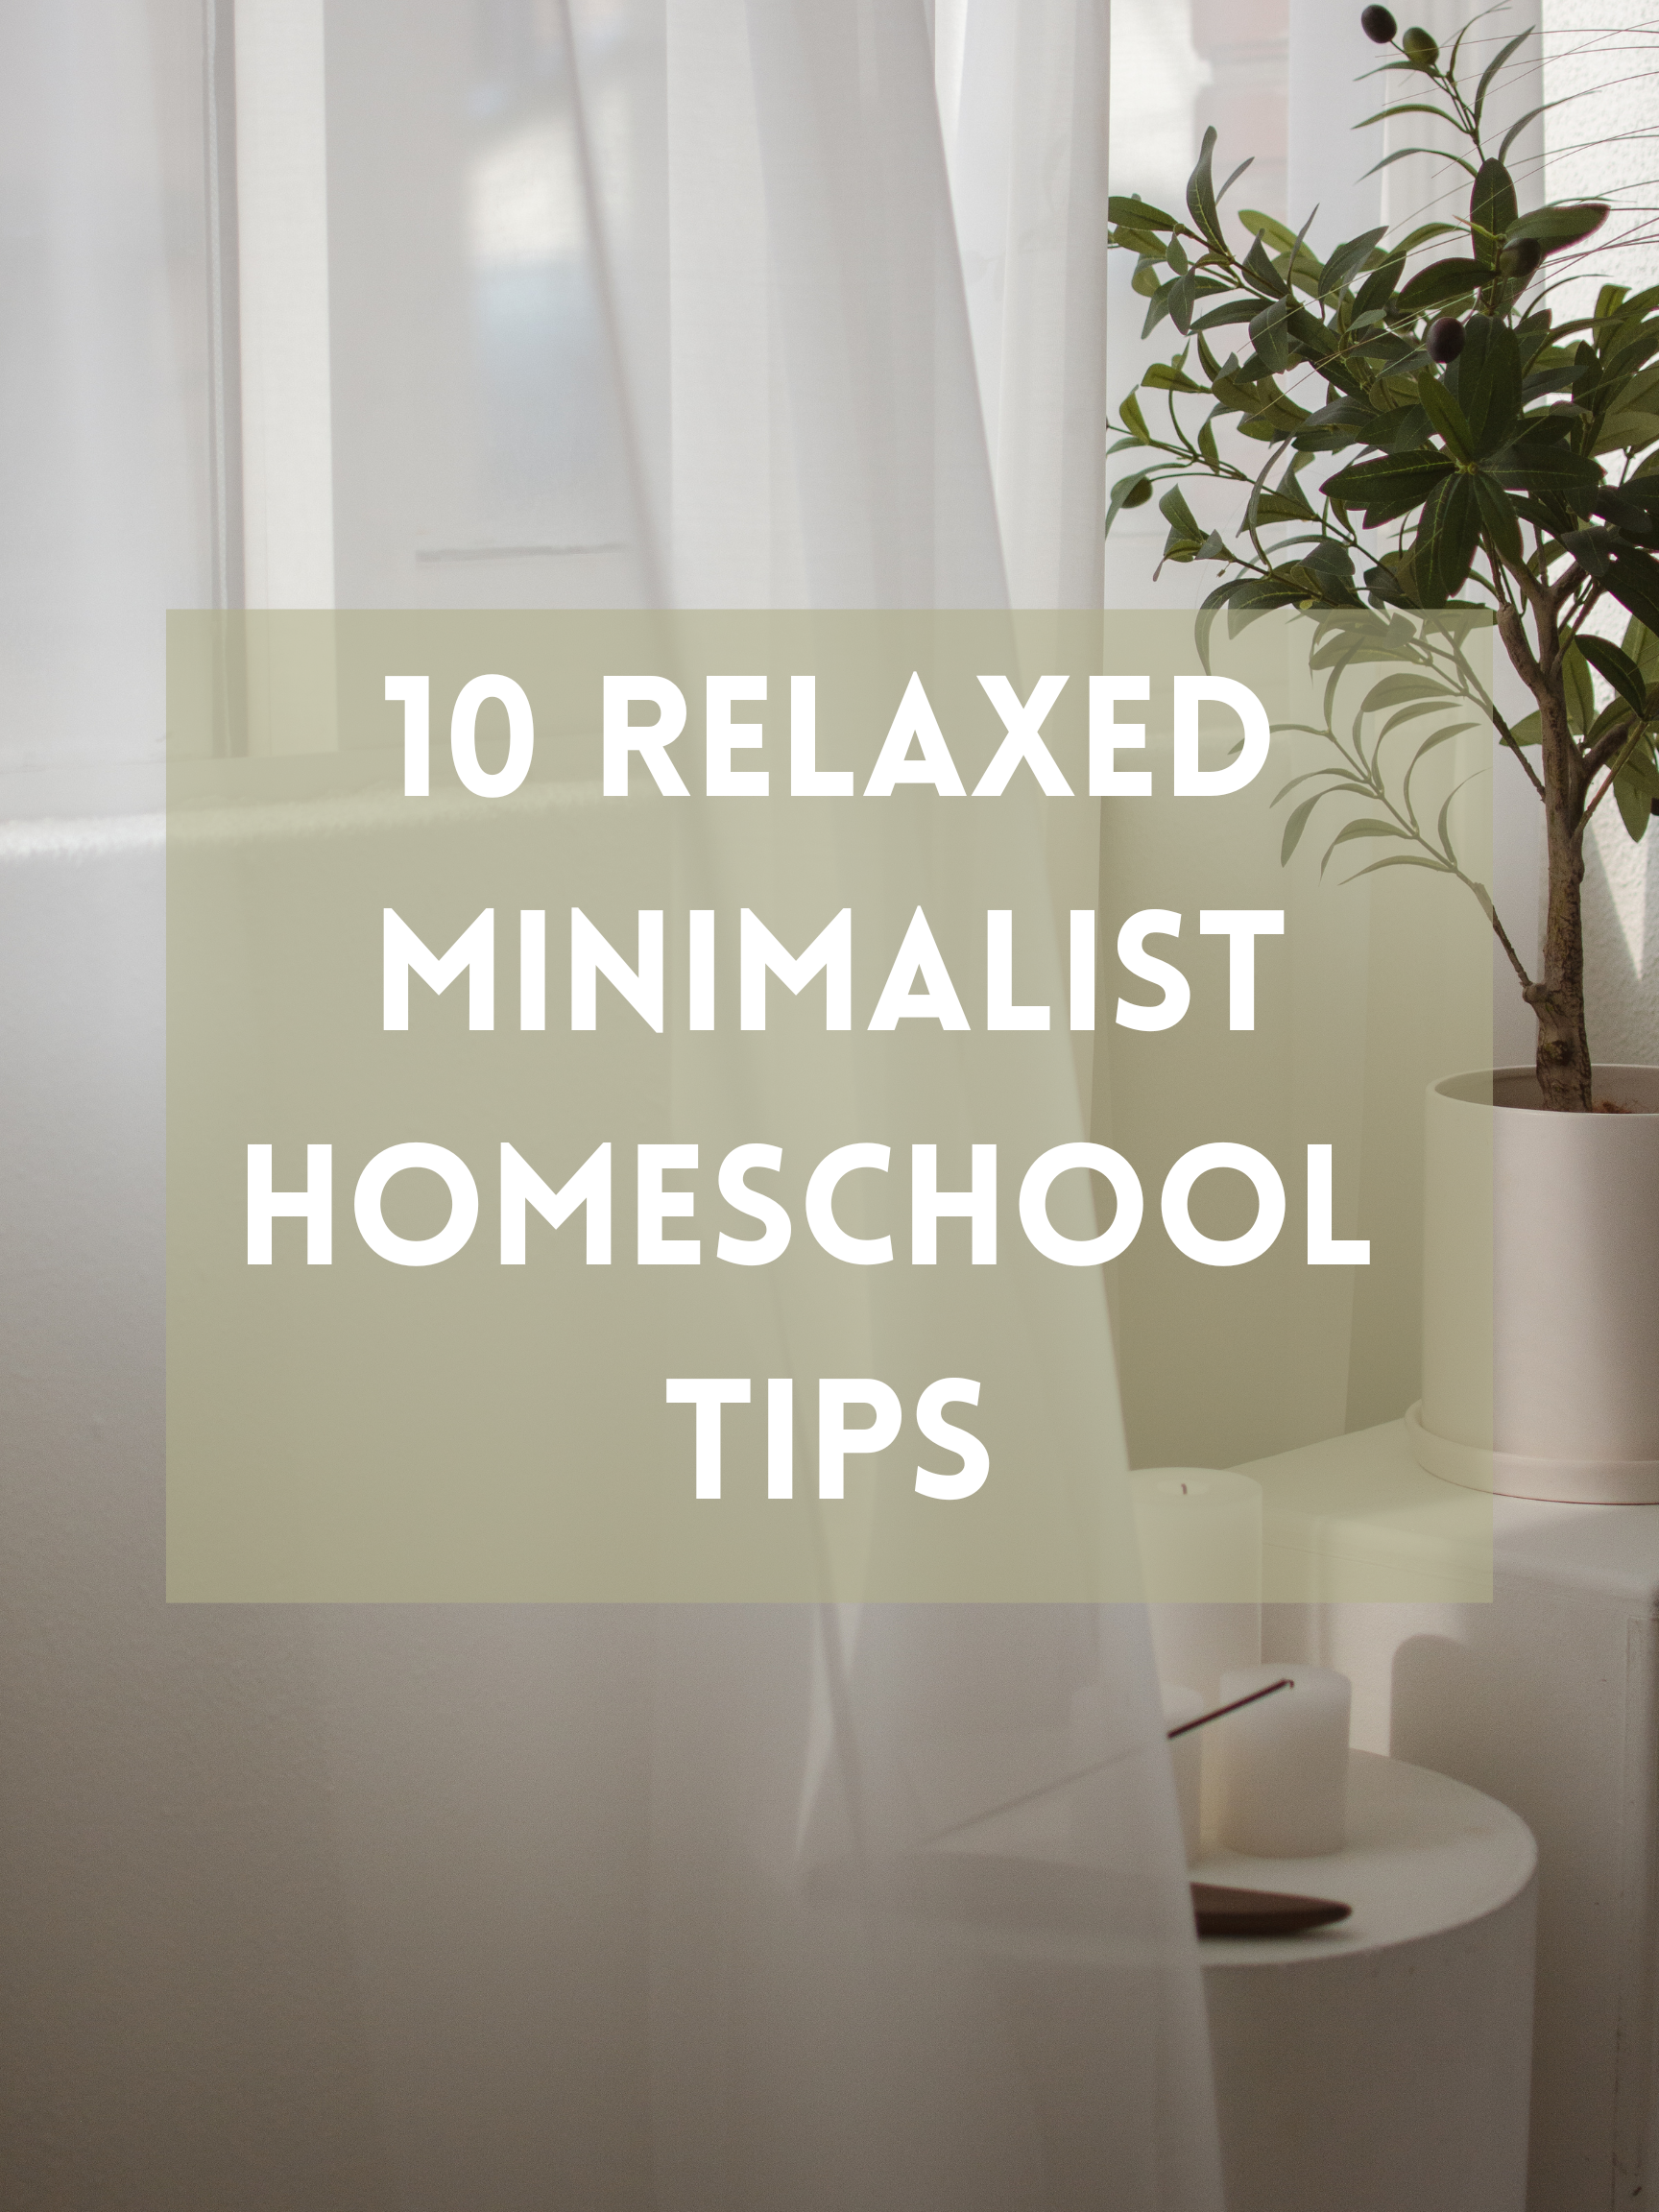 10 Relaxed Minimalist Homeschool Tips